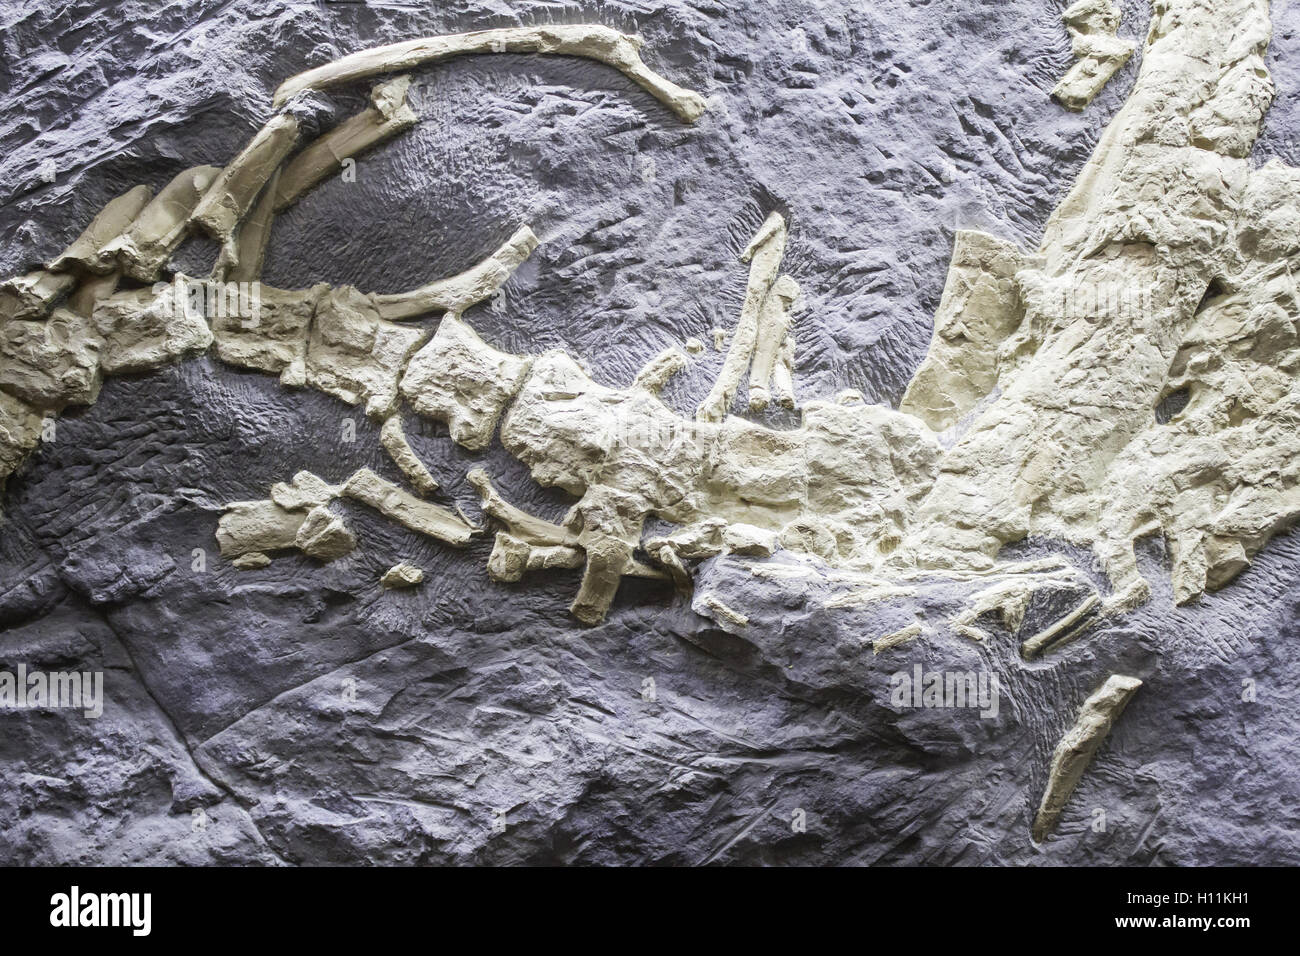 Ancient dinosaur skeleton rock, animals and history Stock Photo